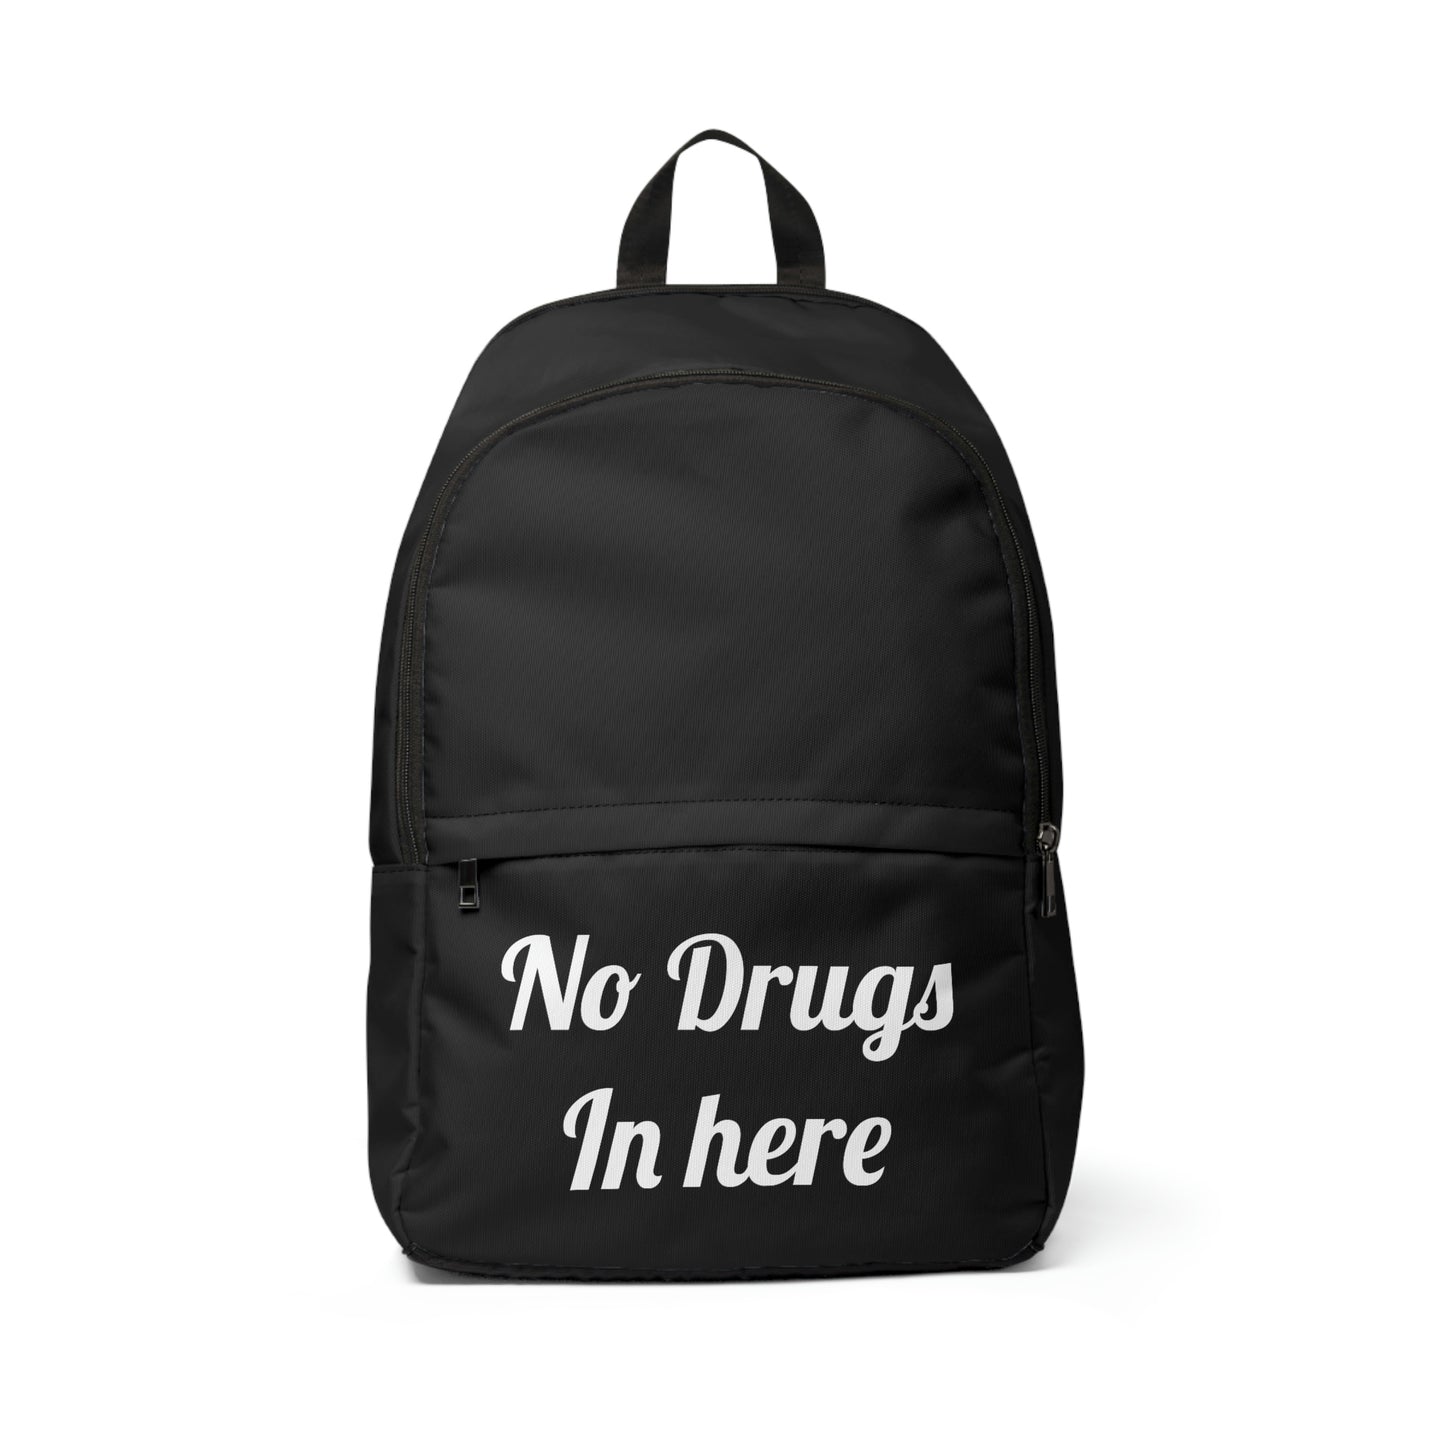 Definitely Not Drugs in Here! Draw string Backpack